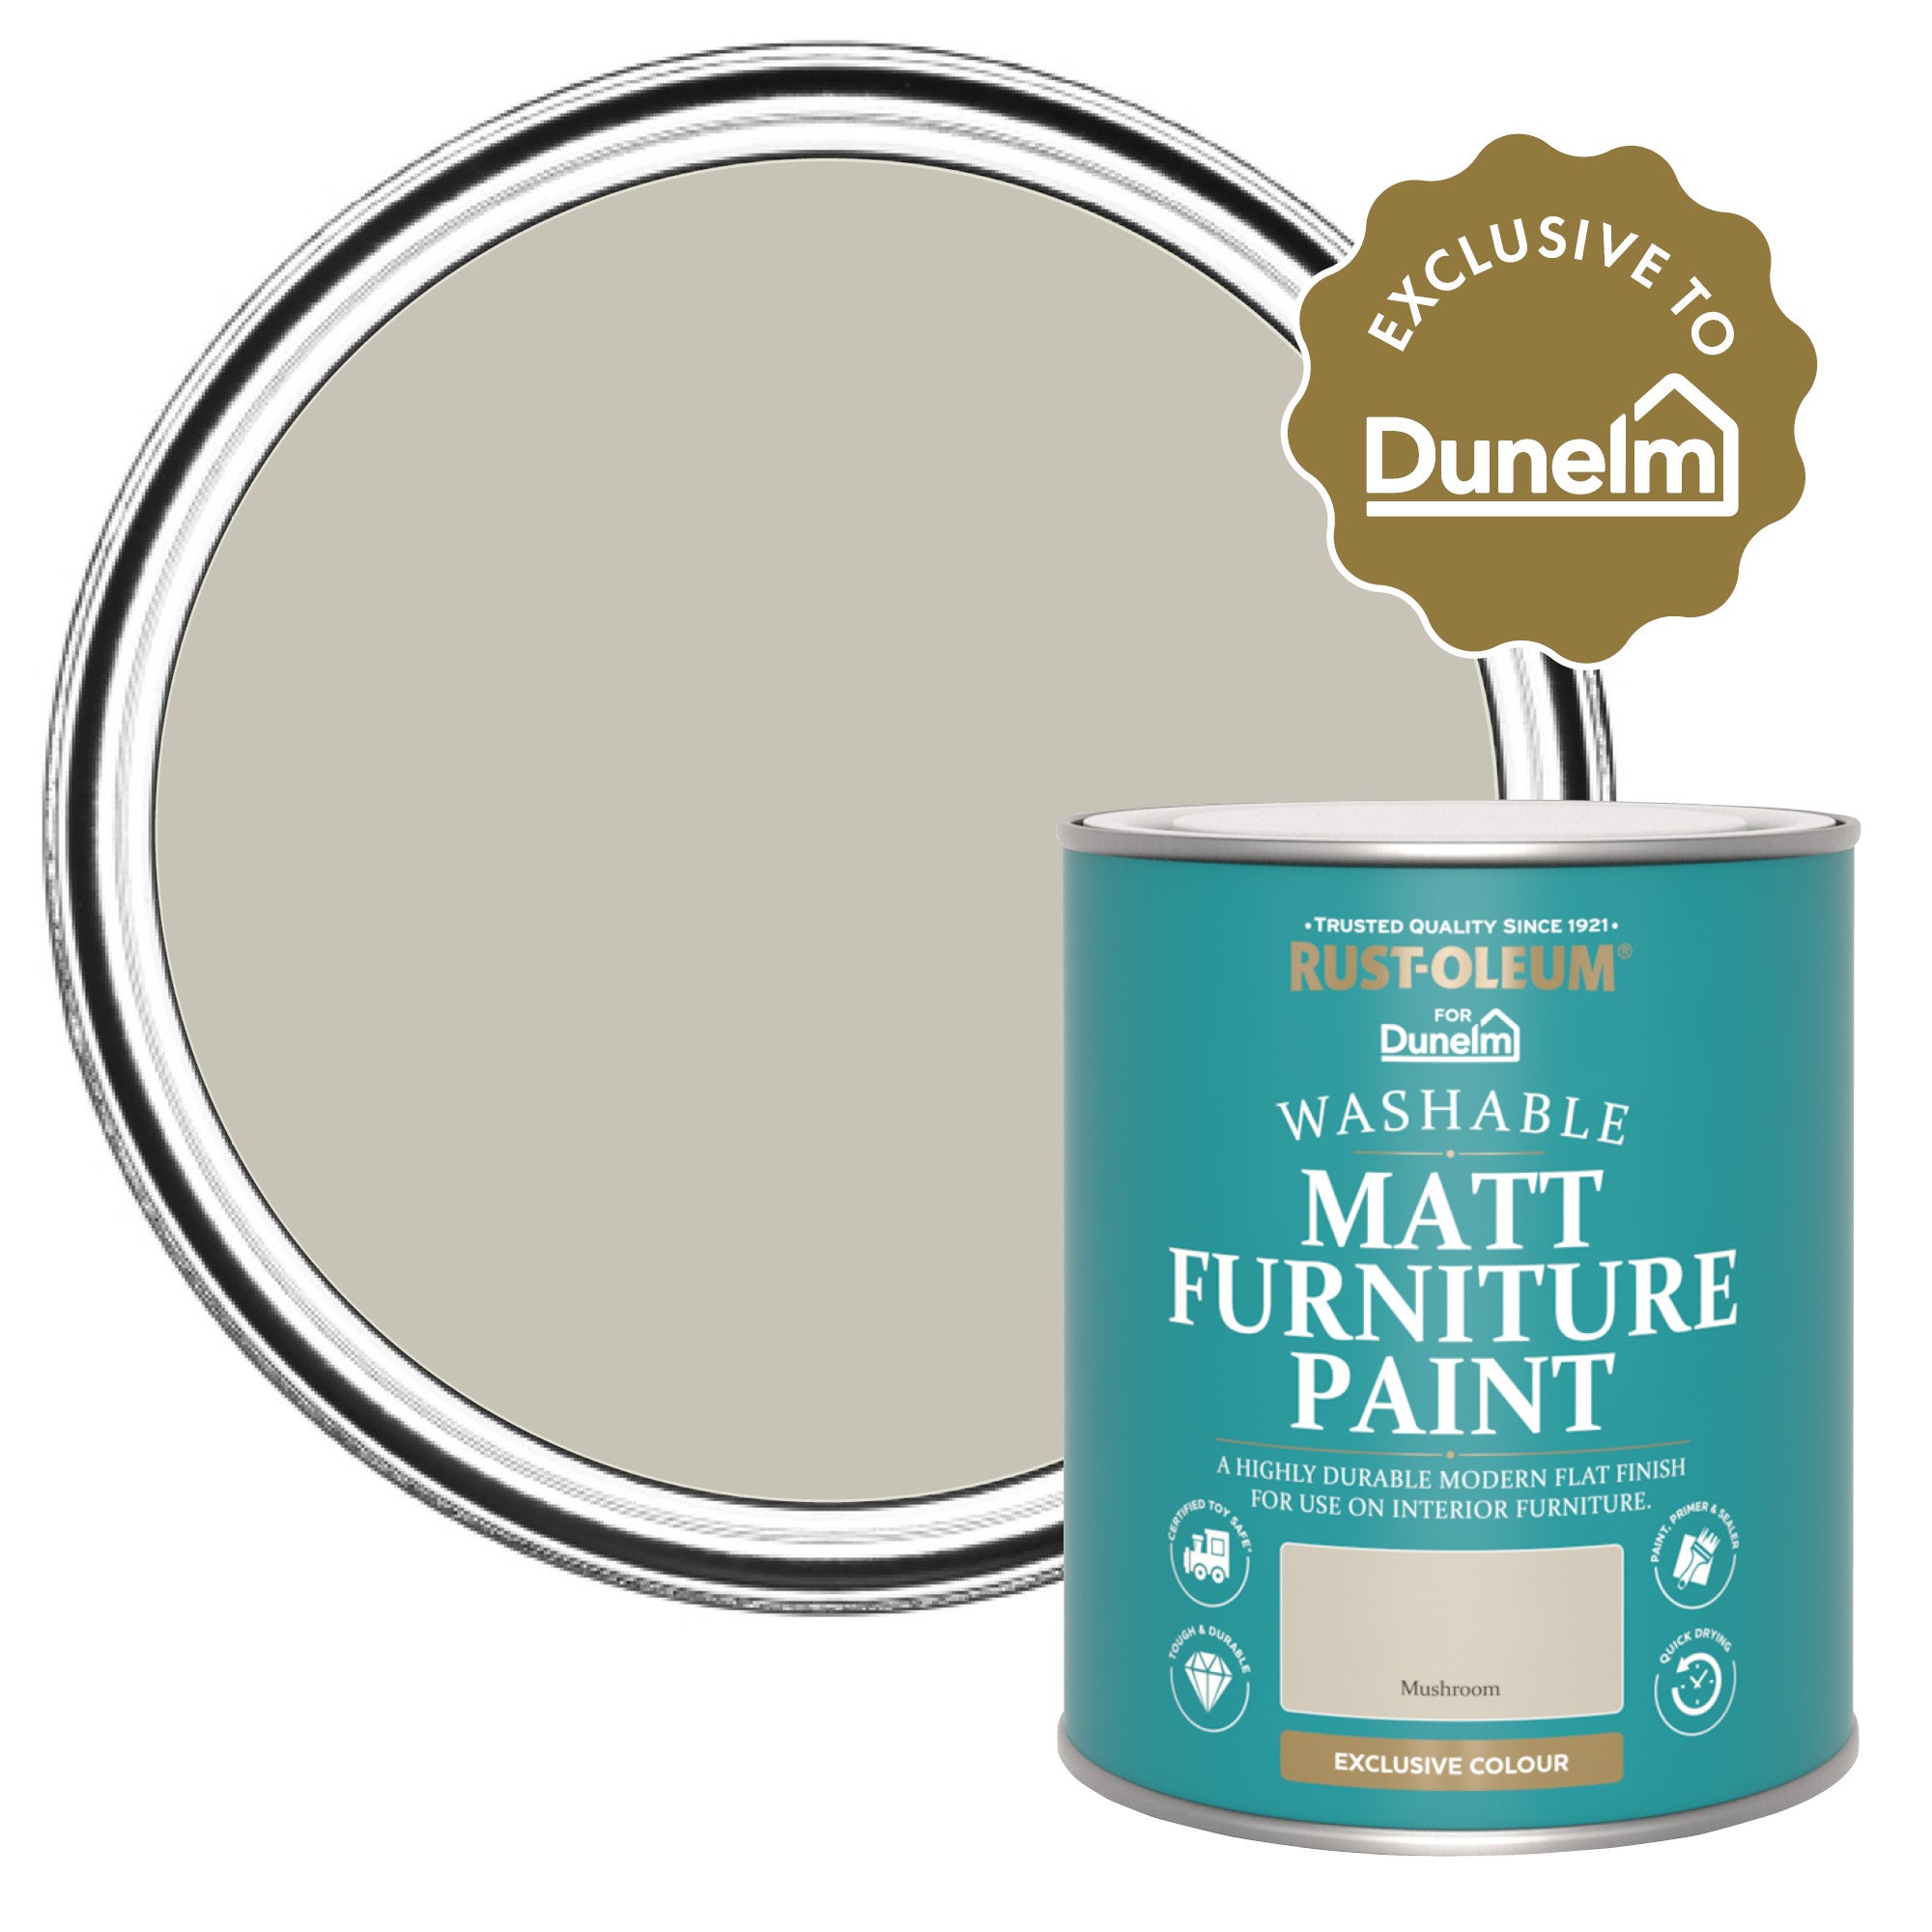 RustOleum X Dunelm Exclusive Mushroom Matt Furniture Paint